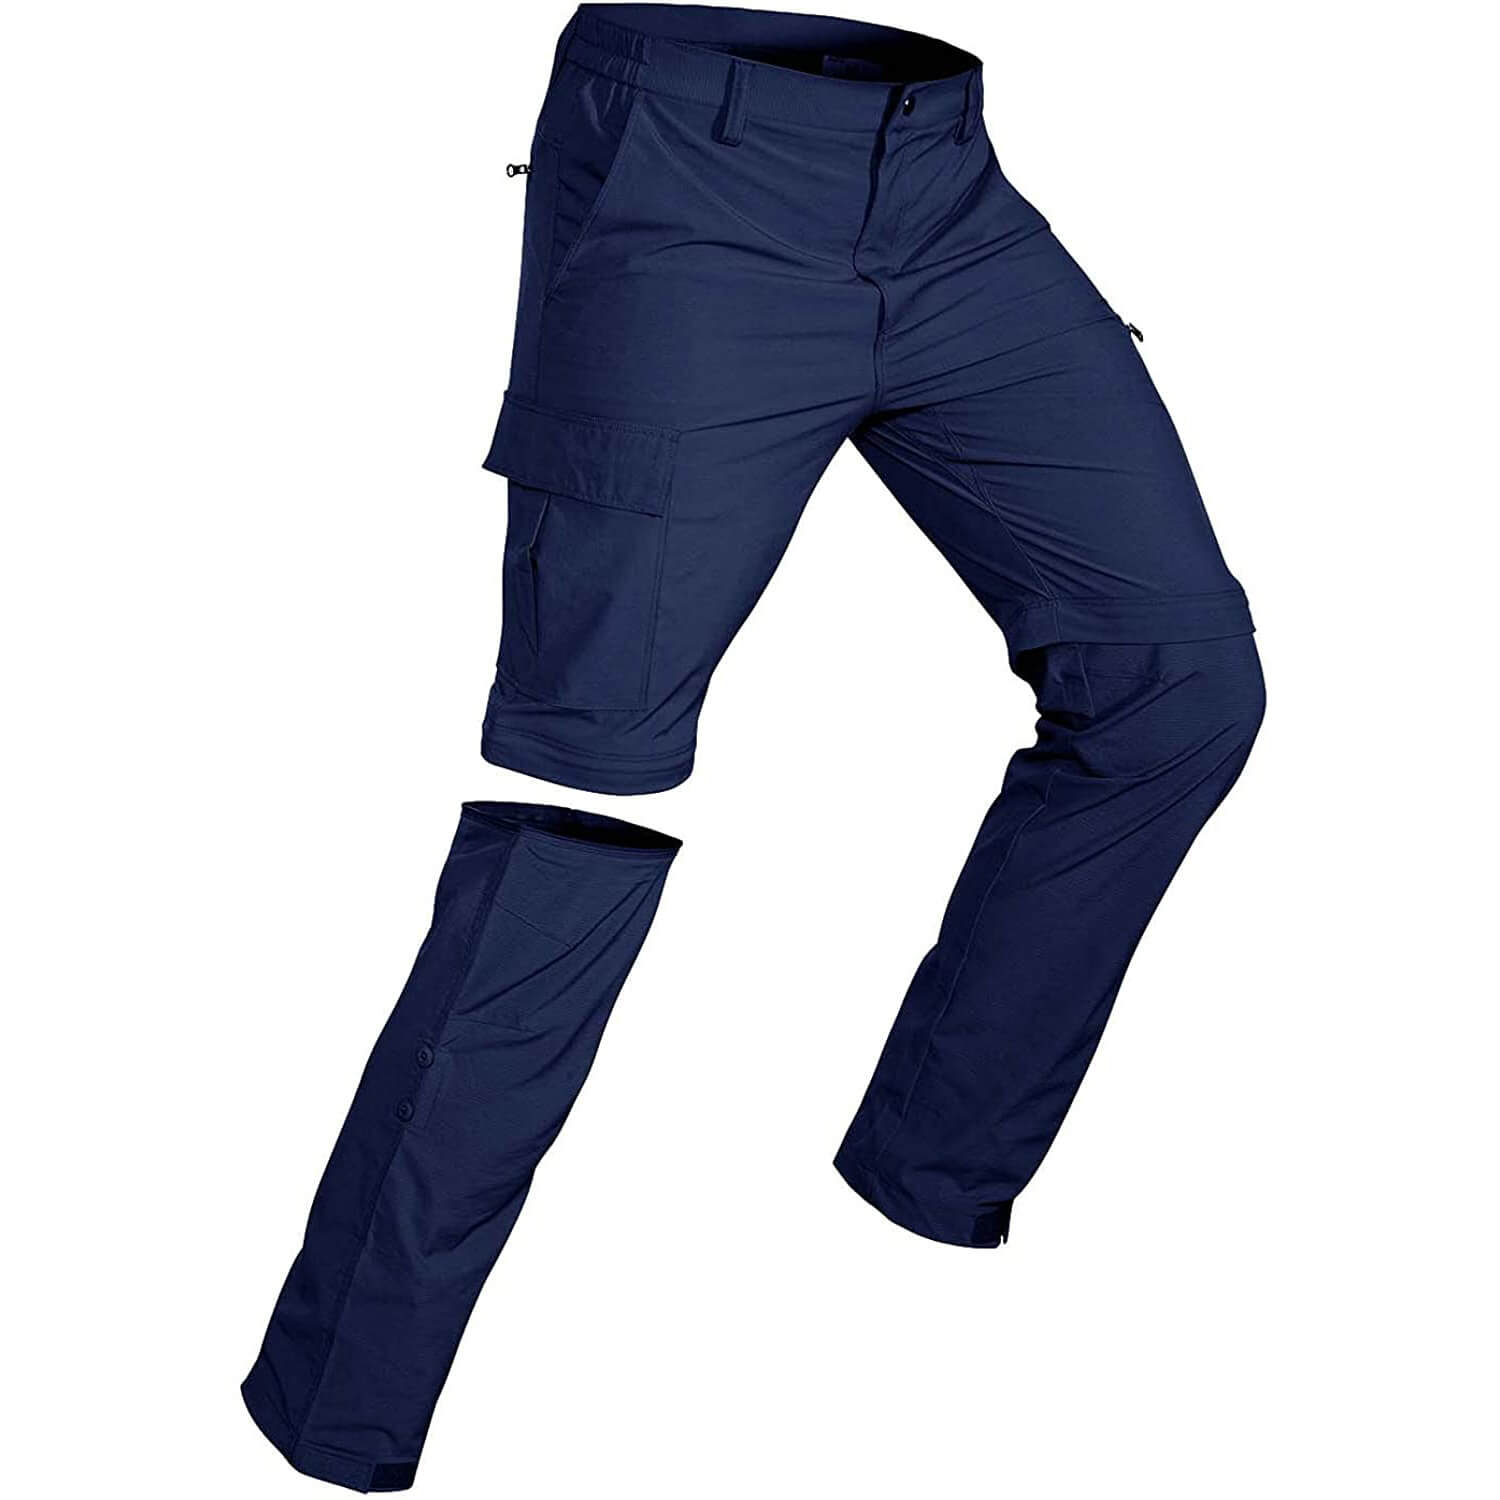 Men's Breathable Cargo Convertible Hiking Pants - Wespornow Navy / XX-Large